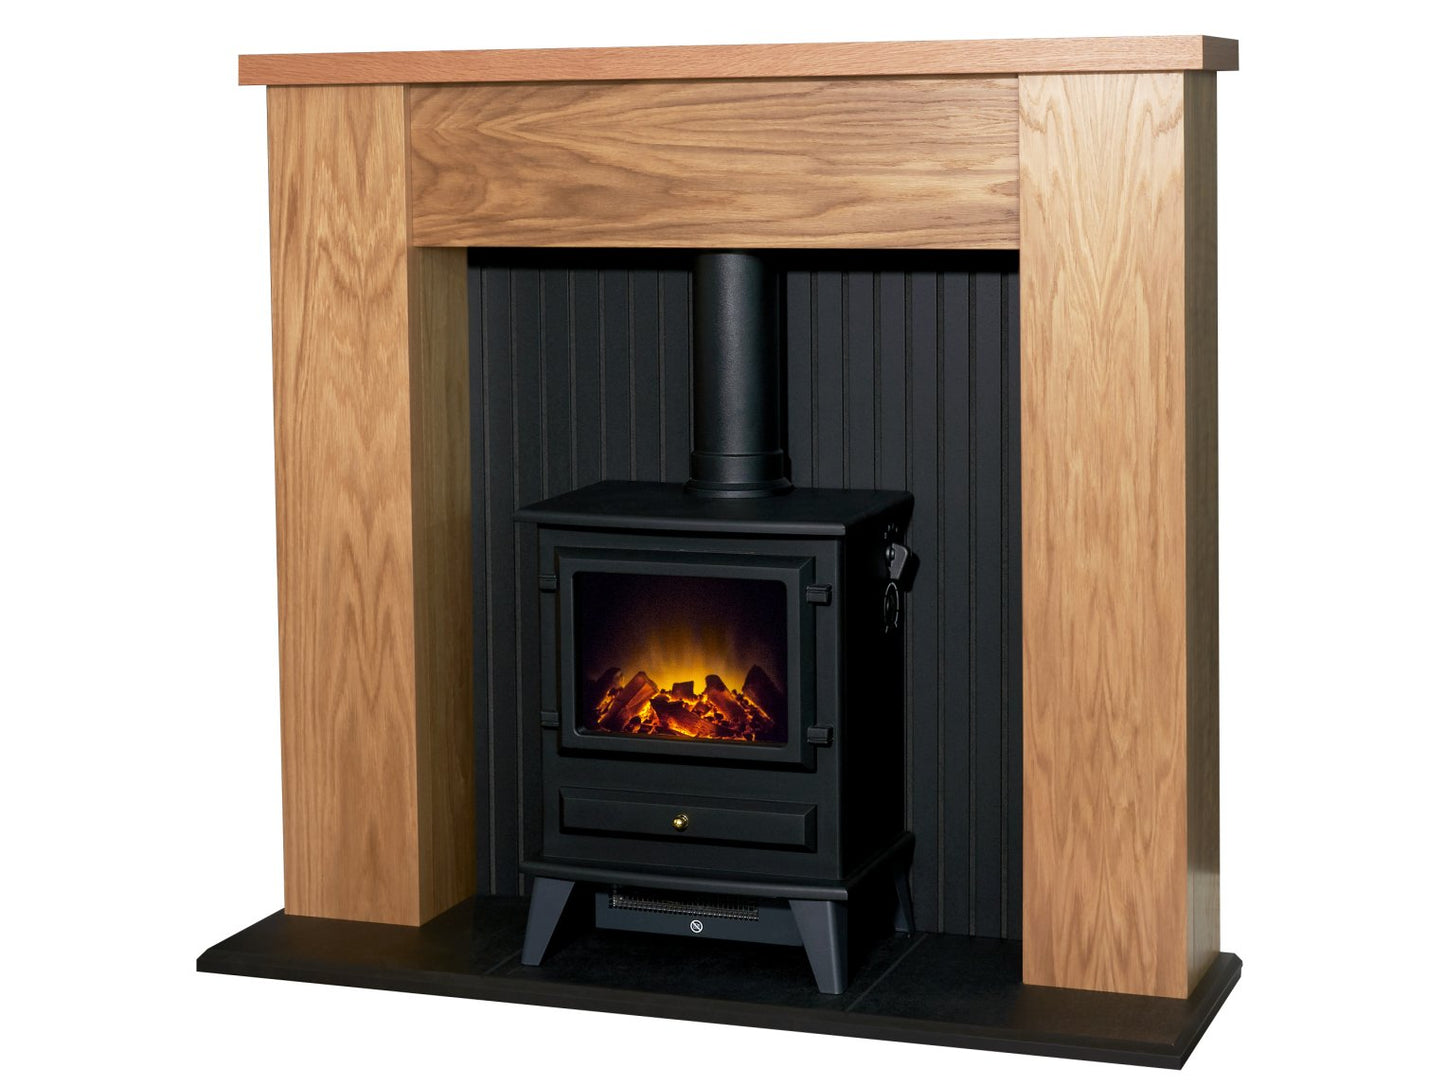 Adam New England Stove Fireplace Oak & Black + Hudson Electric Stove Black, 48"